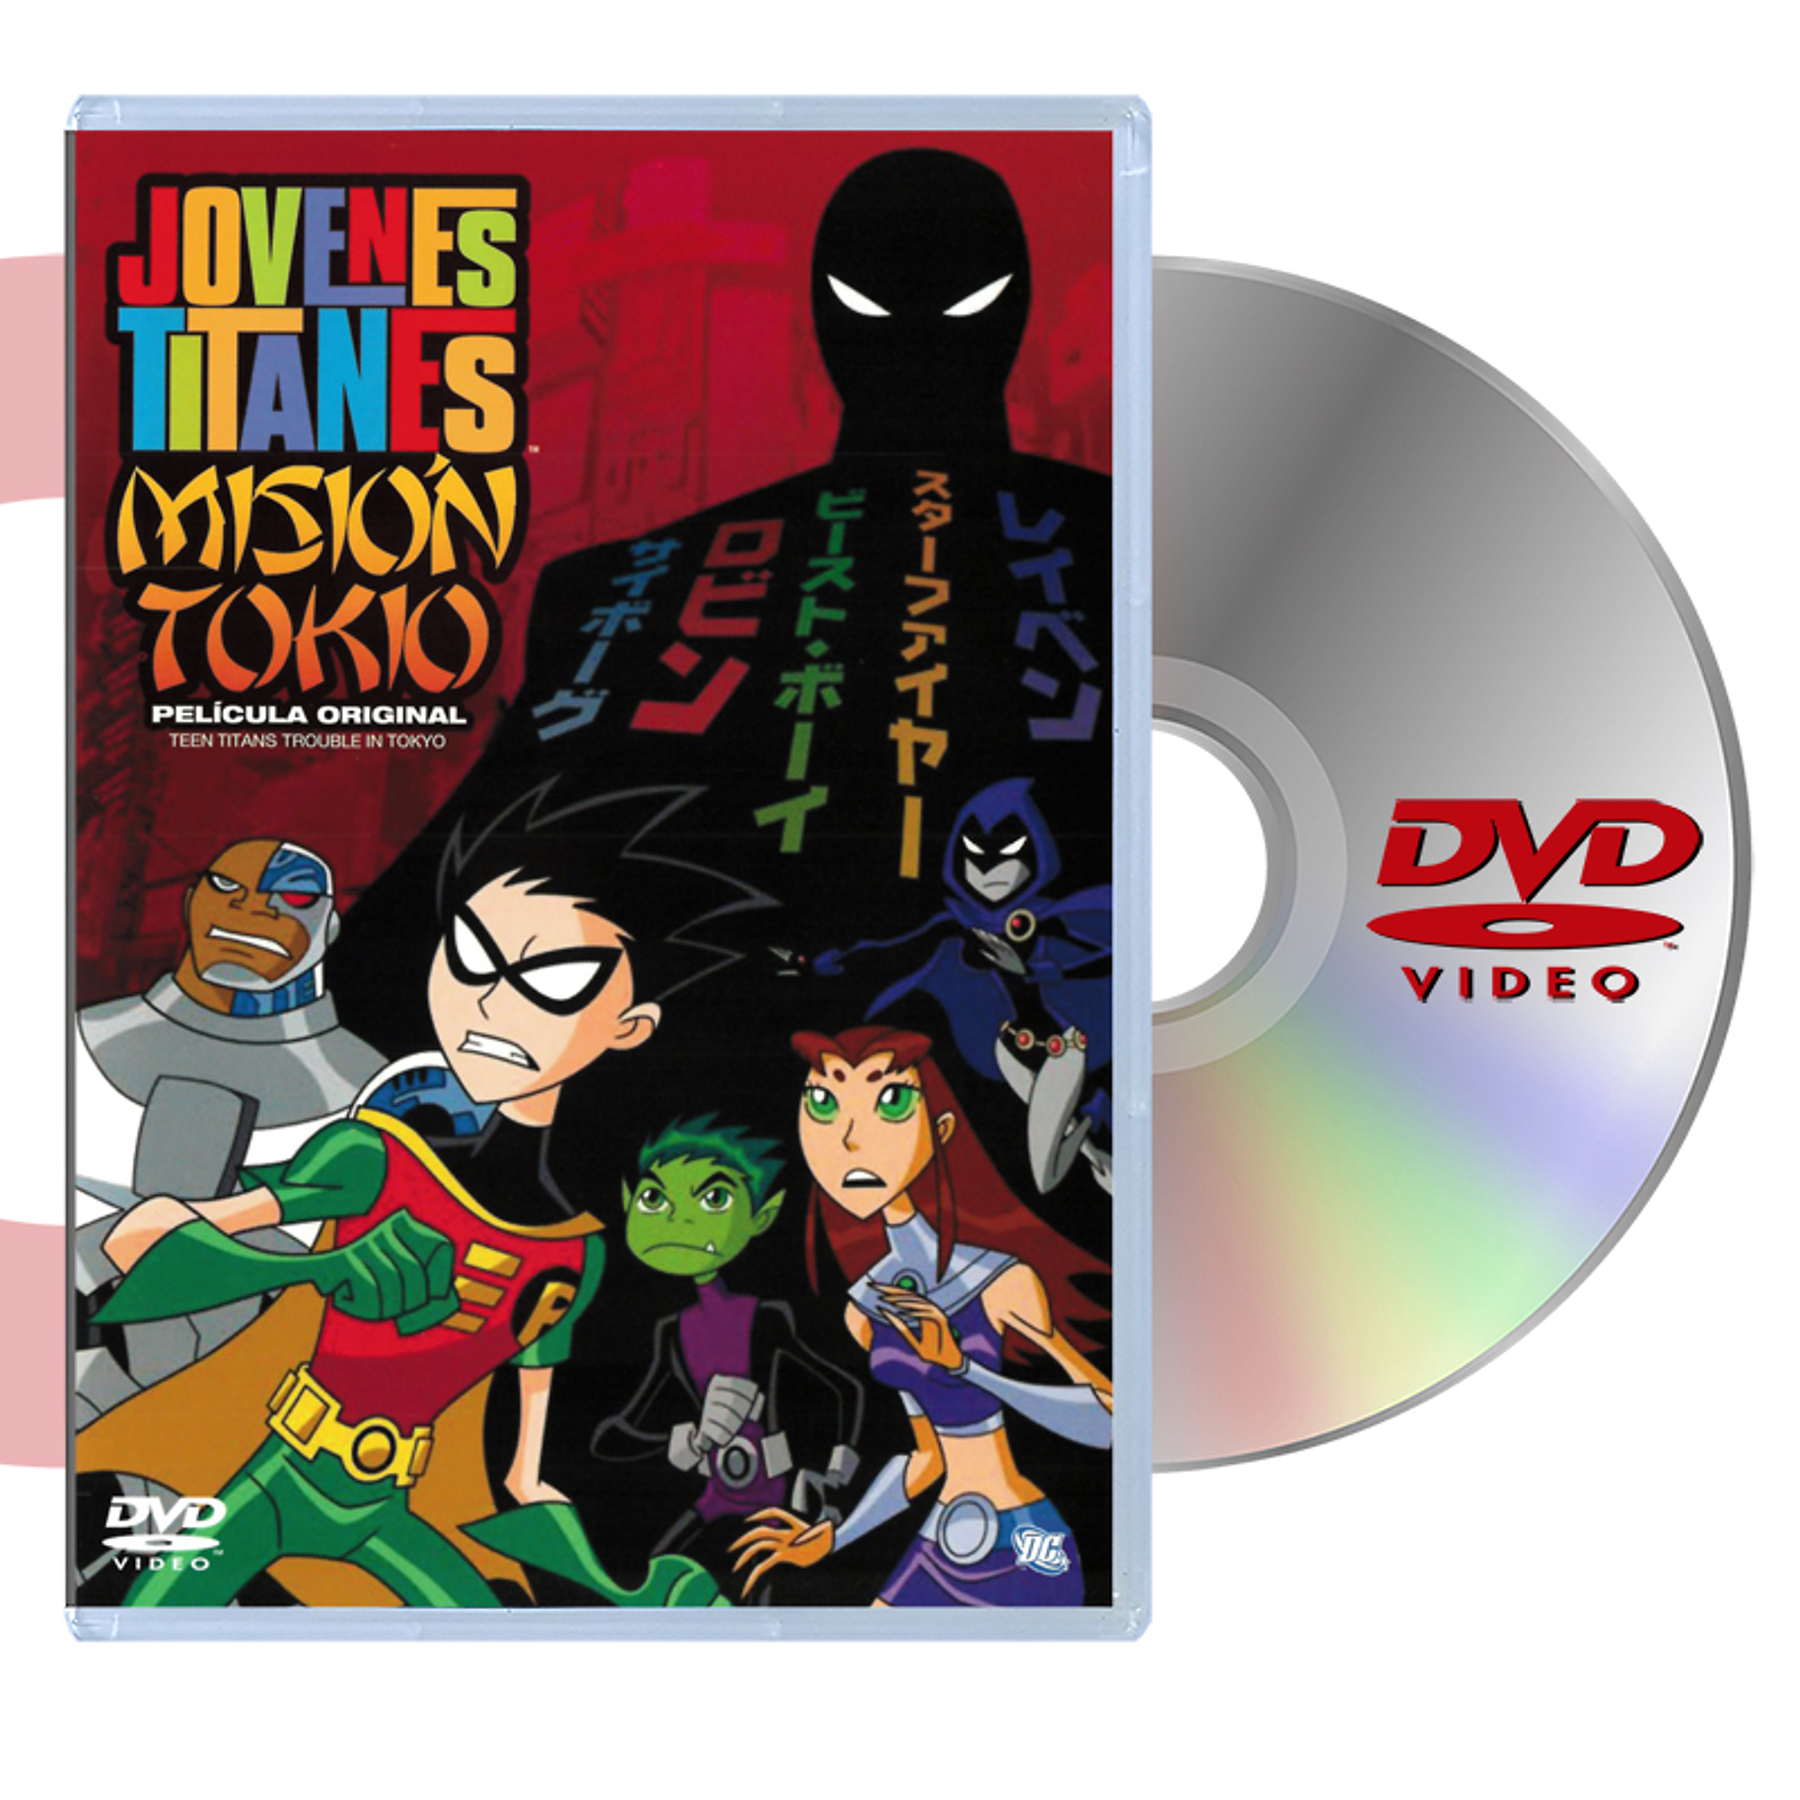 DVD JOVENES TITANES MISION TOKIO